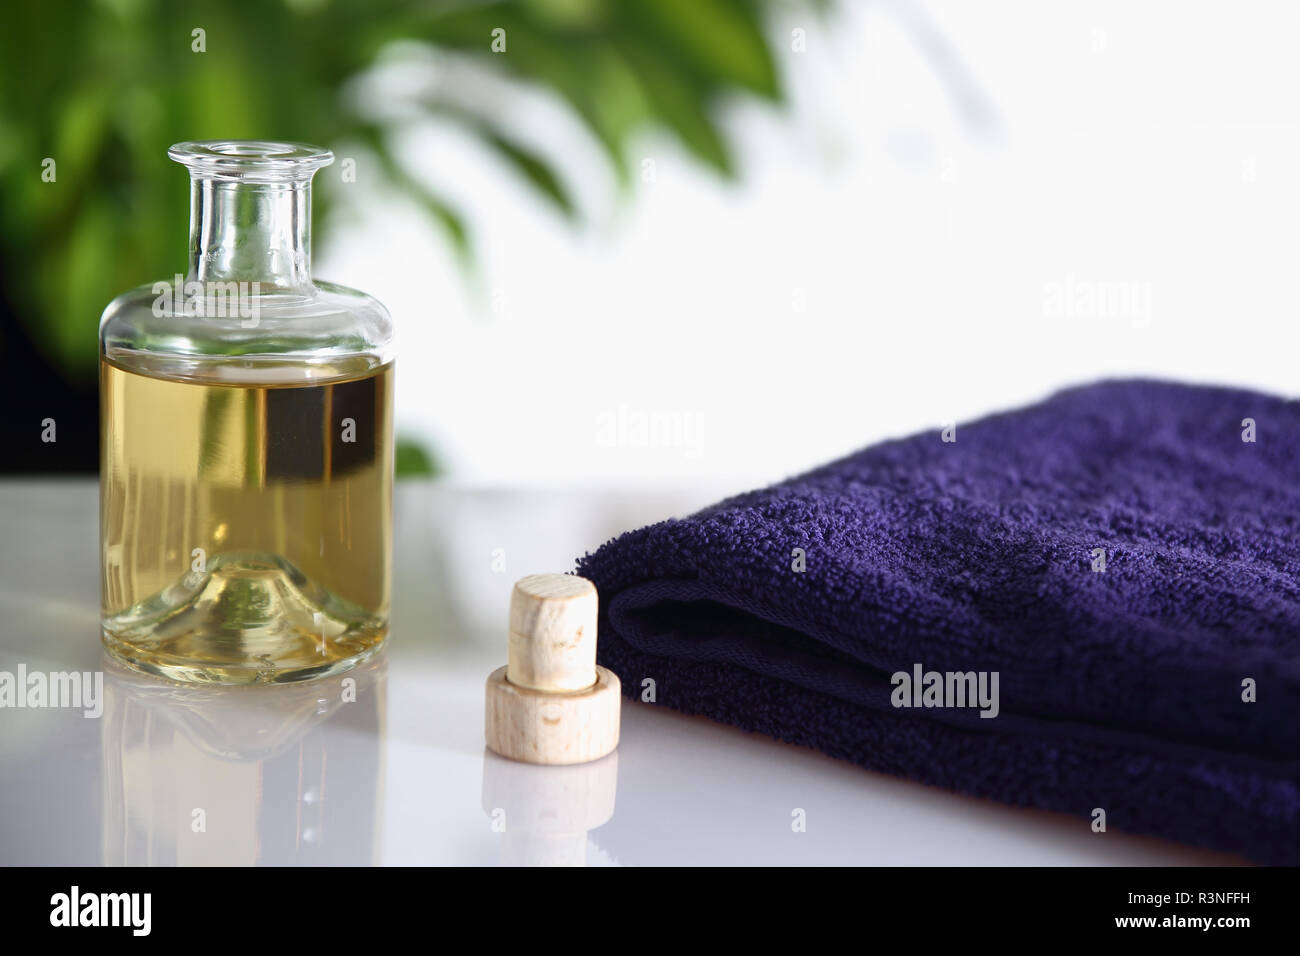 bath additive Stock Photo